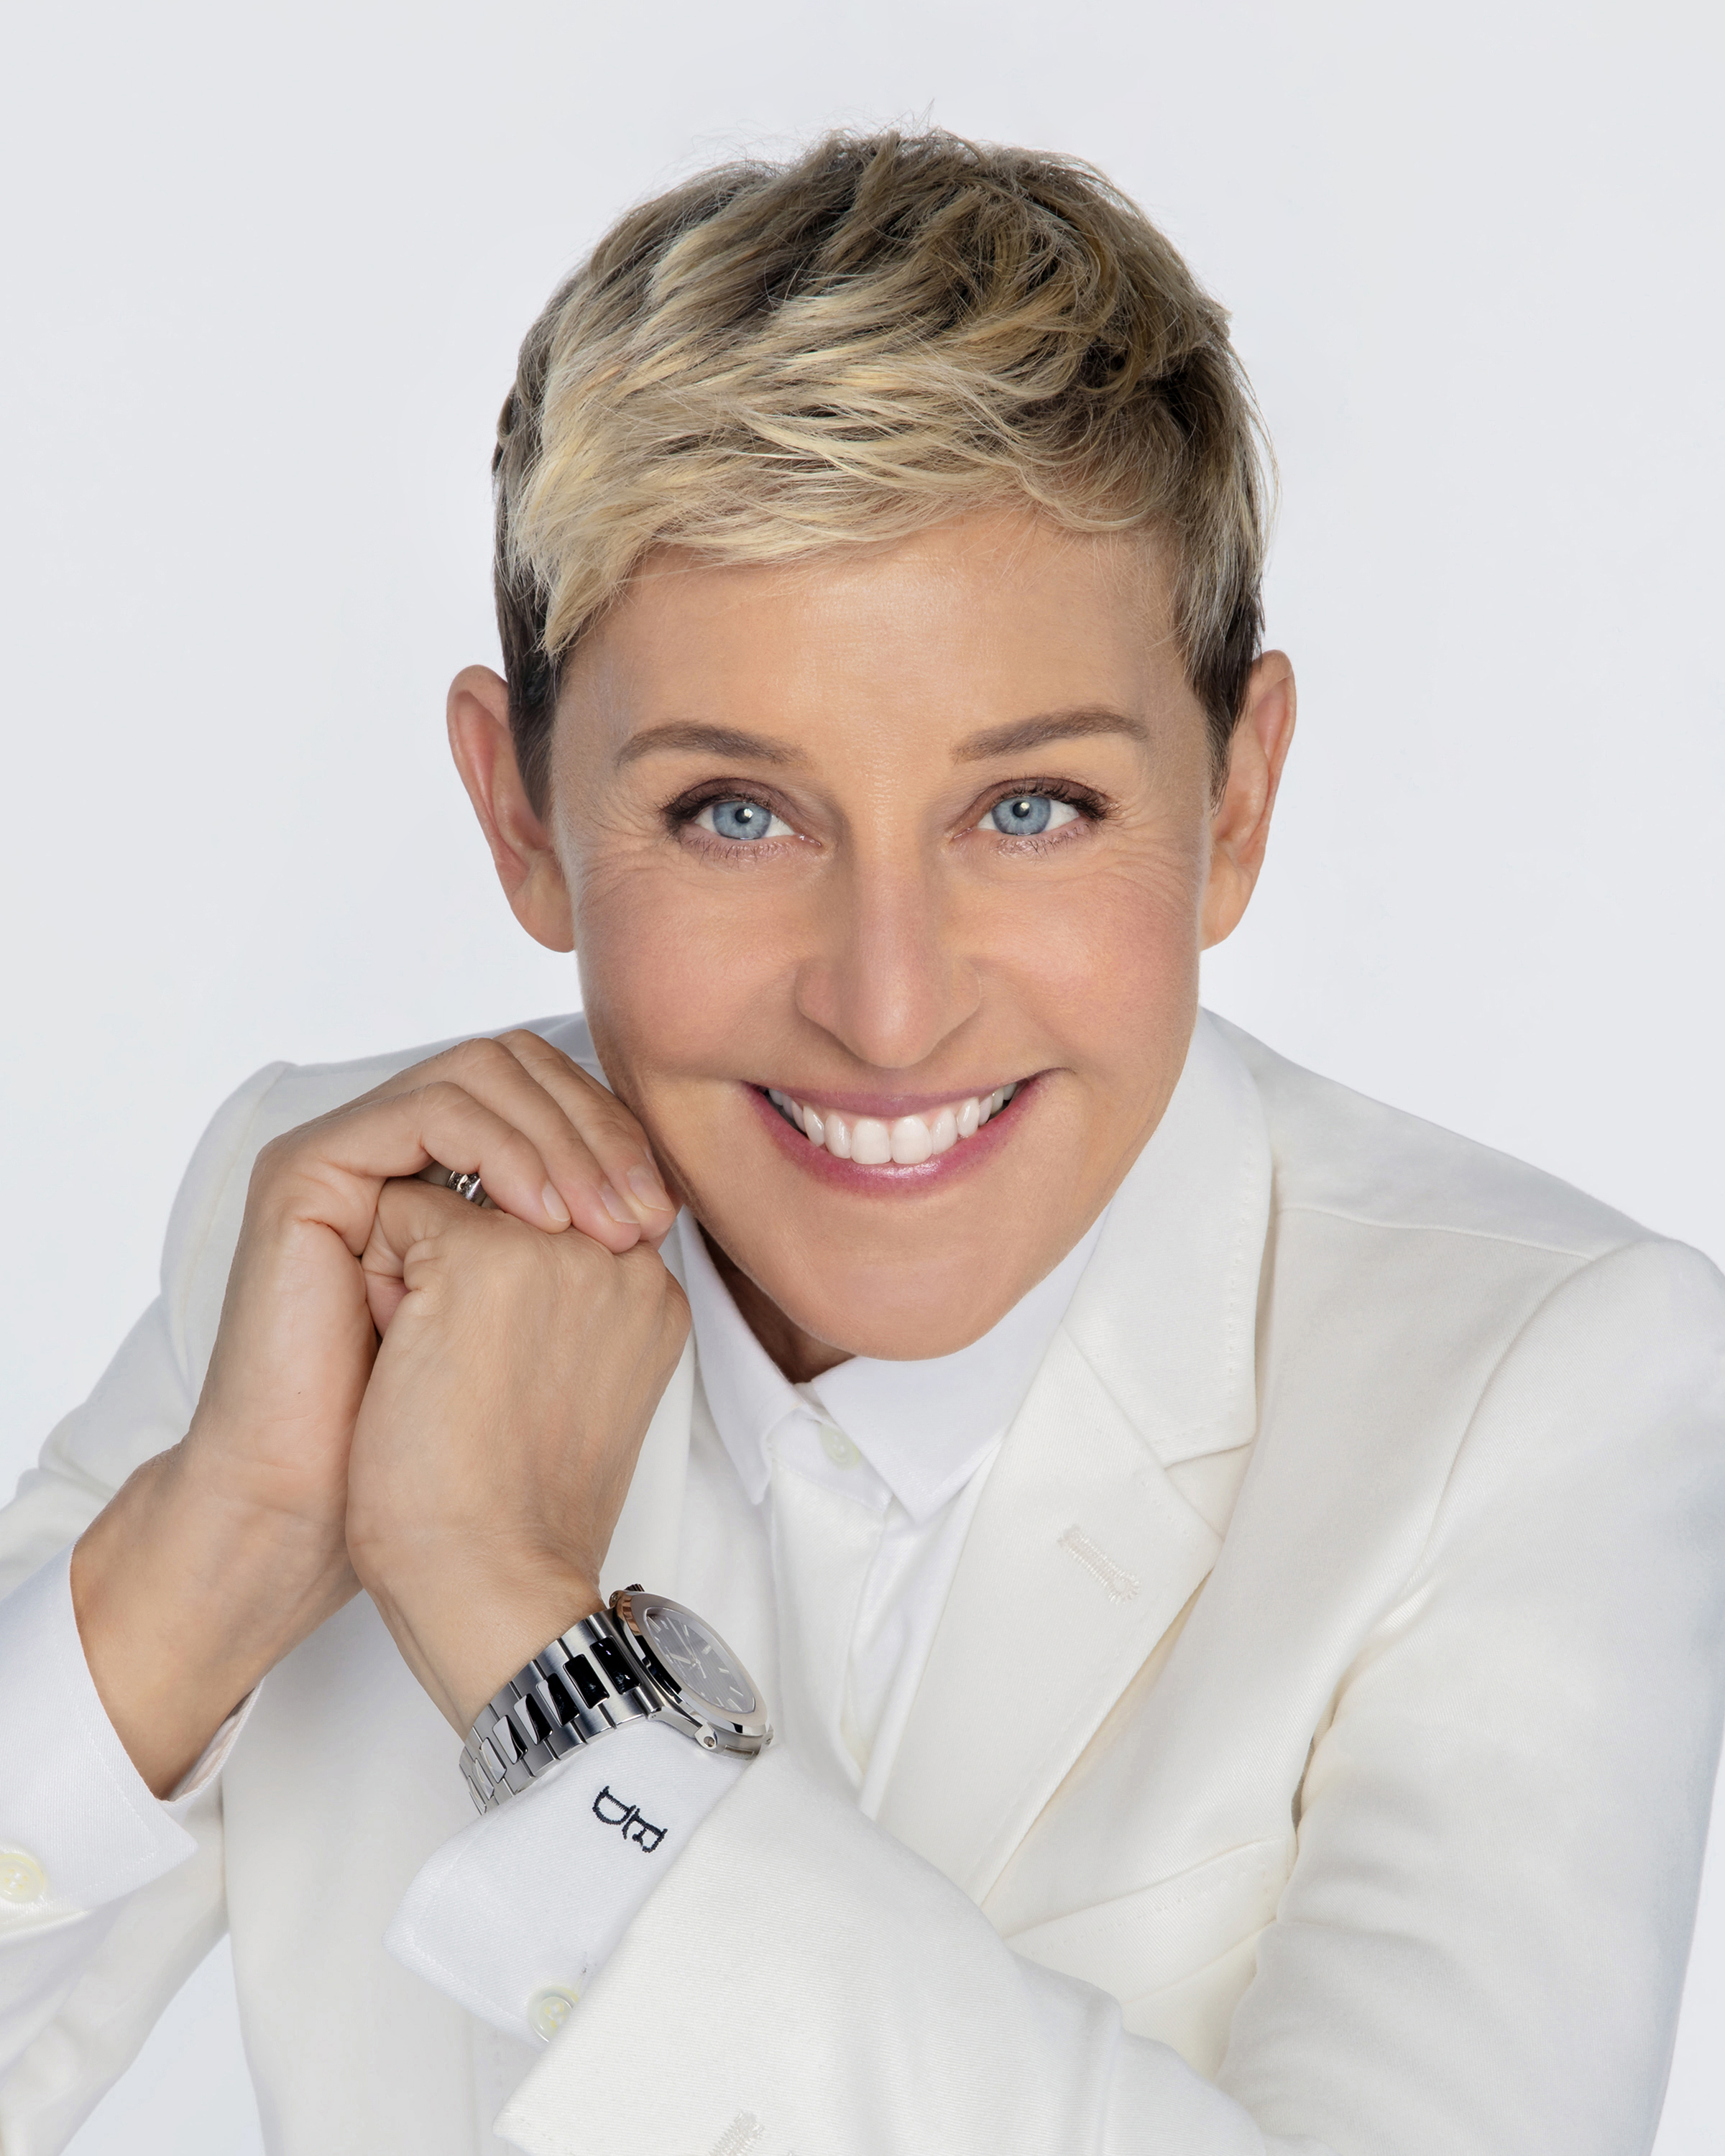 American comedian and television host Ellen DeGeneres turns 62